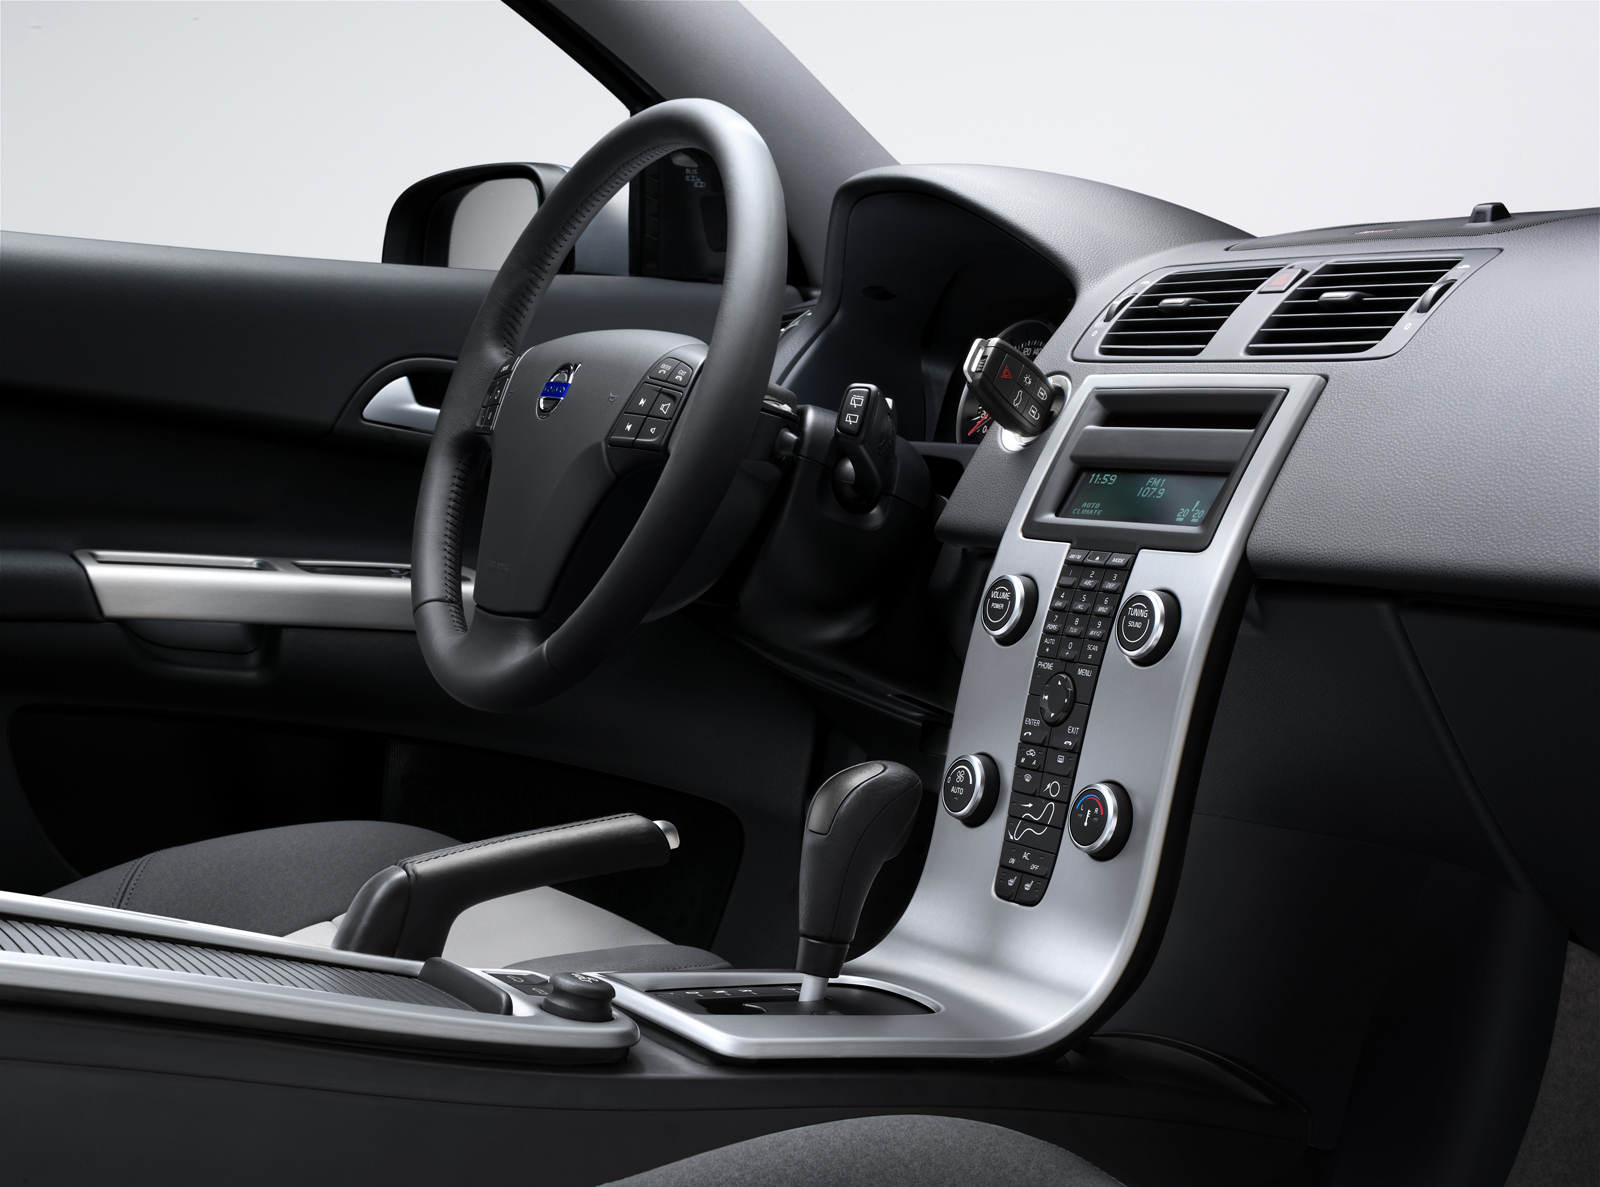 Volvo C30 Interior Design Award